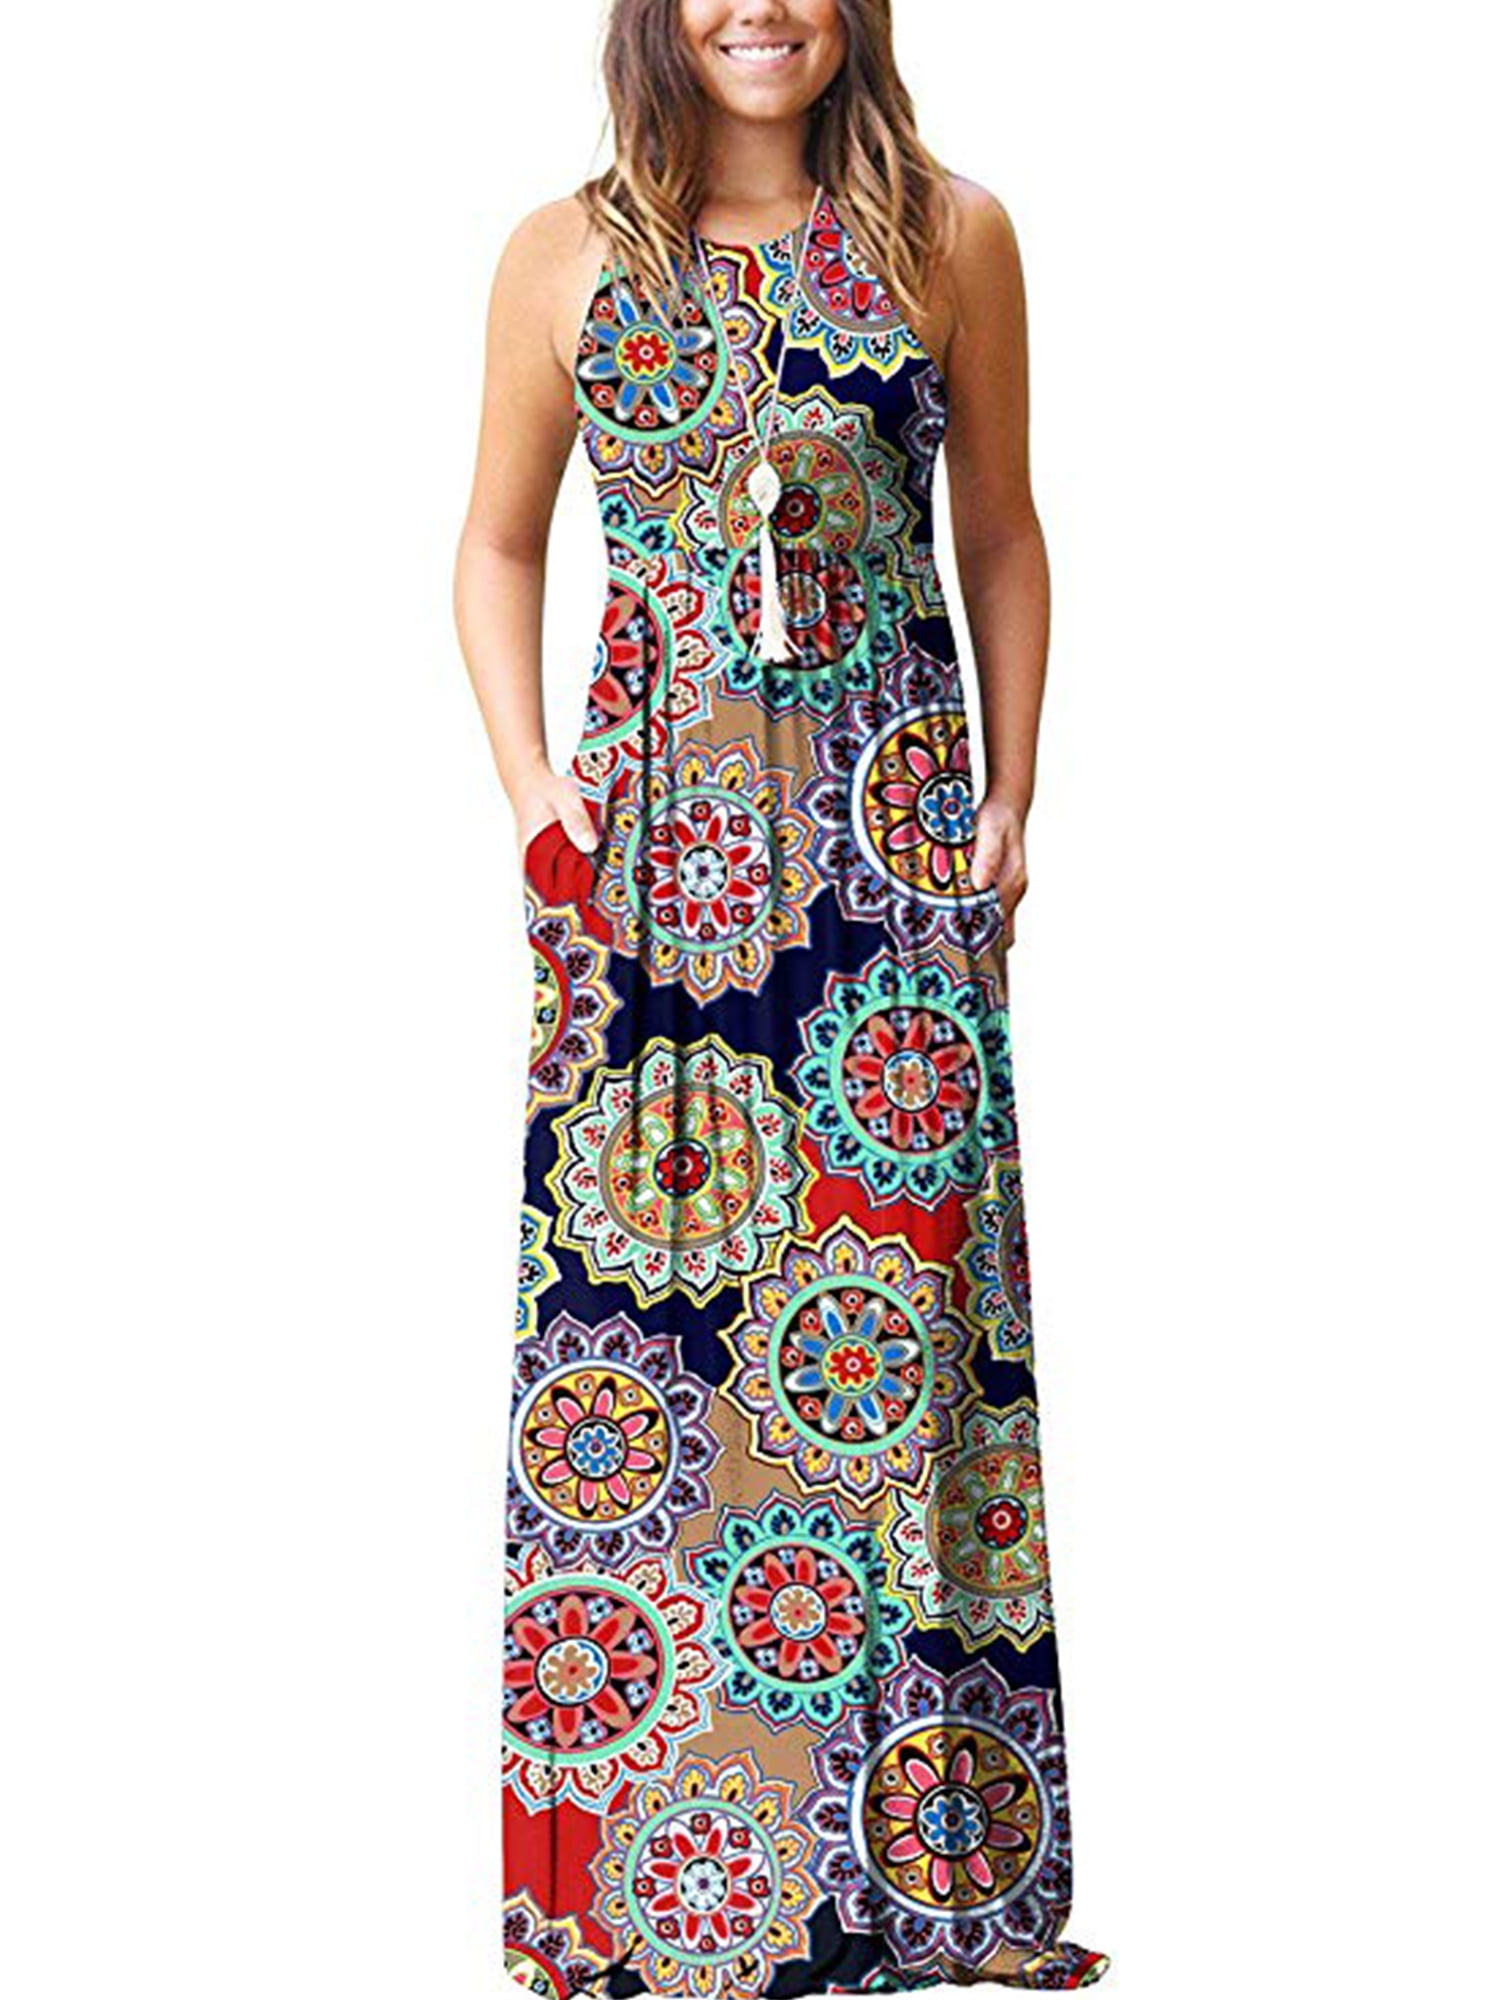 Dress for Women 2021 Sleeveless Pockets Womens Casual Floral Sundress Maxi Long Dress Beach Party Tunic Tank 